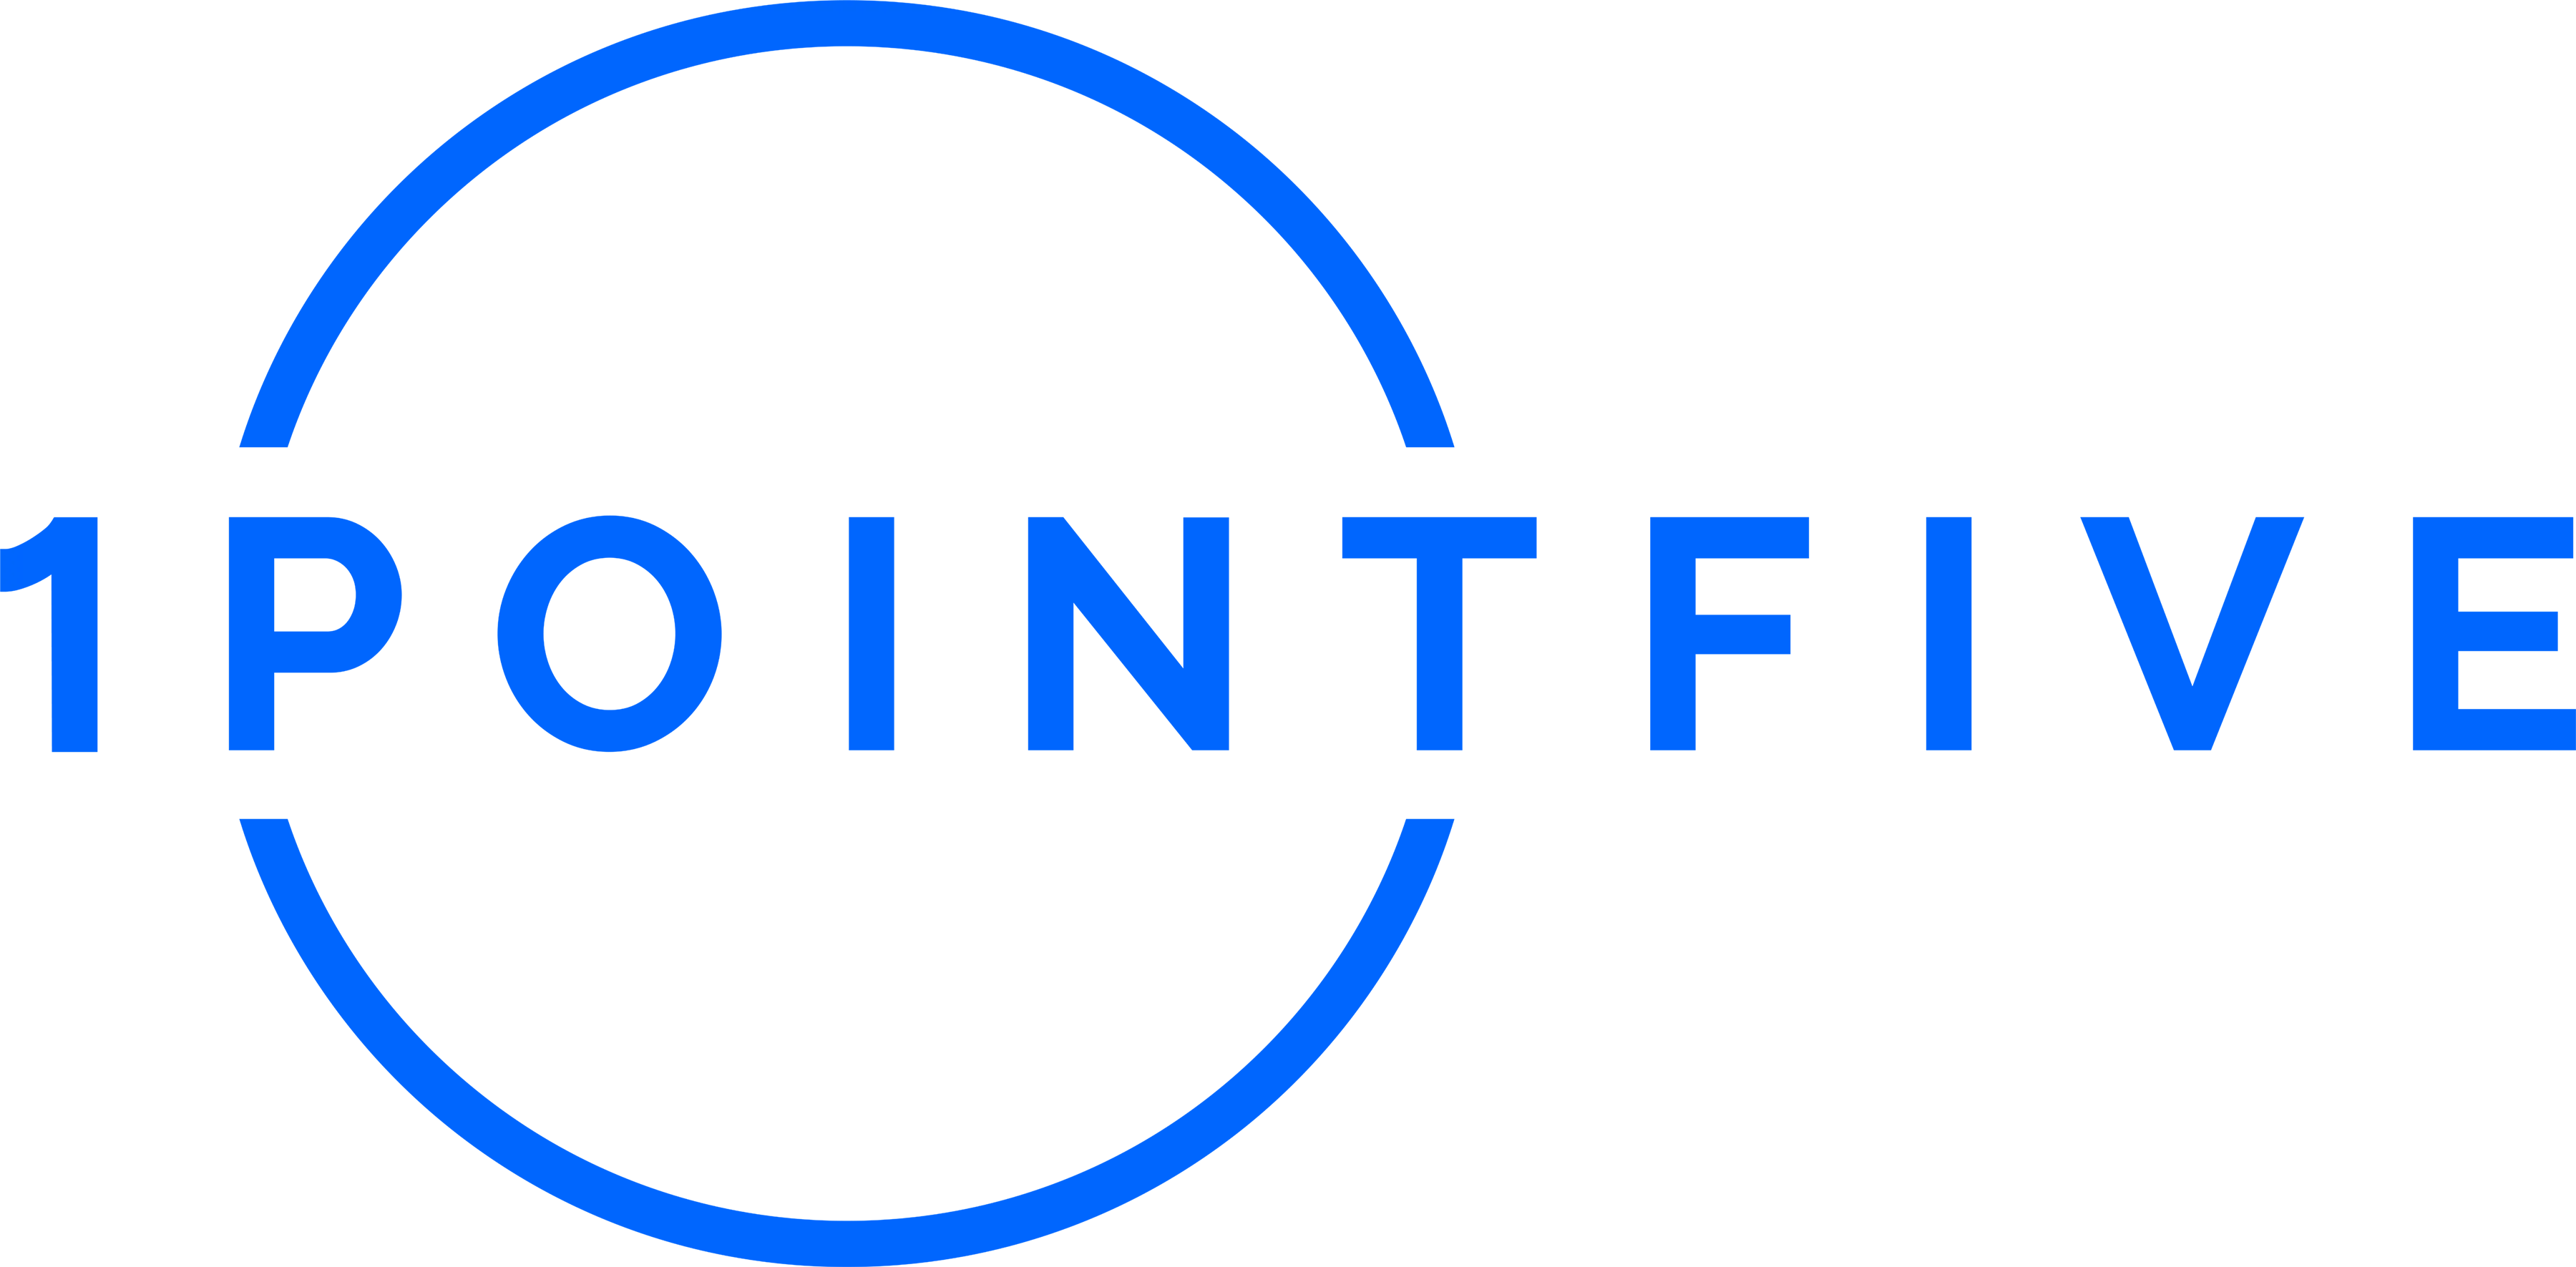 1PointFive Logo